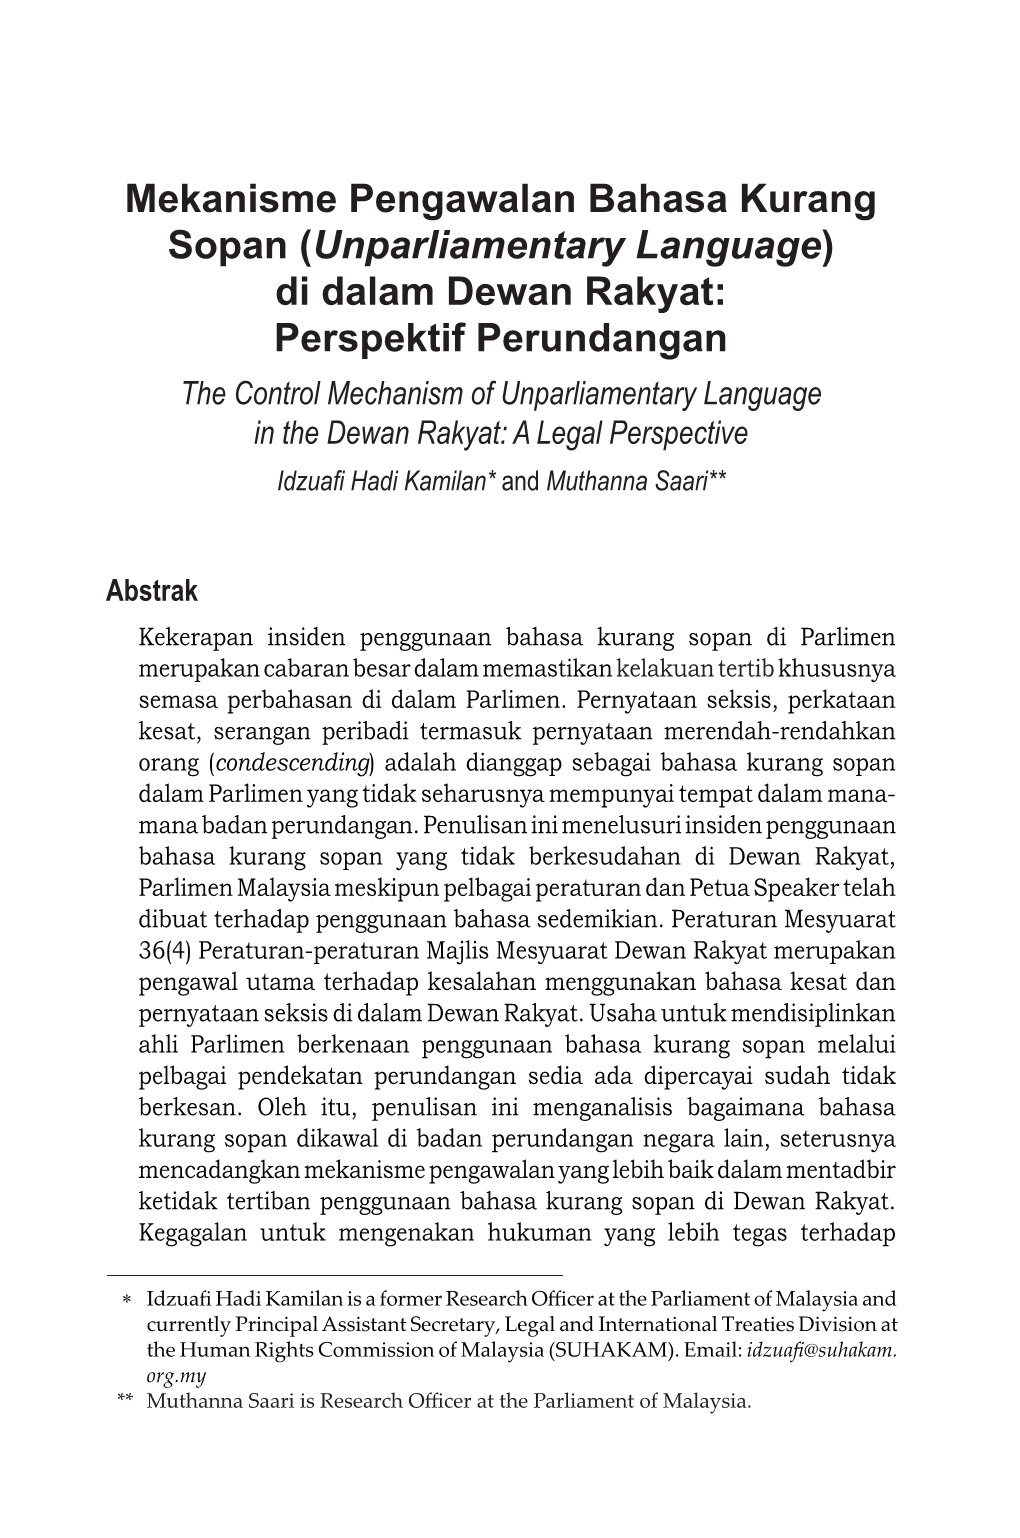 Perspektif Perundangan the Control Mechanism of Unparliamentary Language in the Dewan Rakyat: a Legal Perspective Idzuafi Hadi Kamilan* and Muthanna Saari**